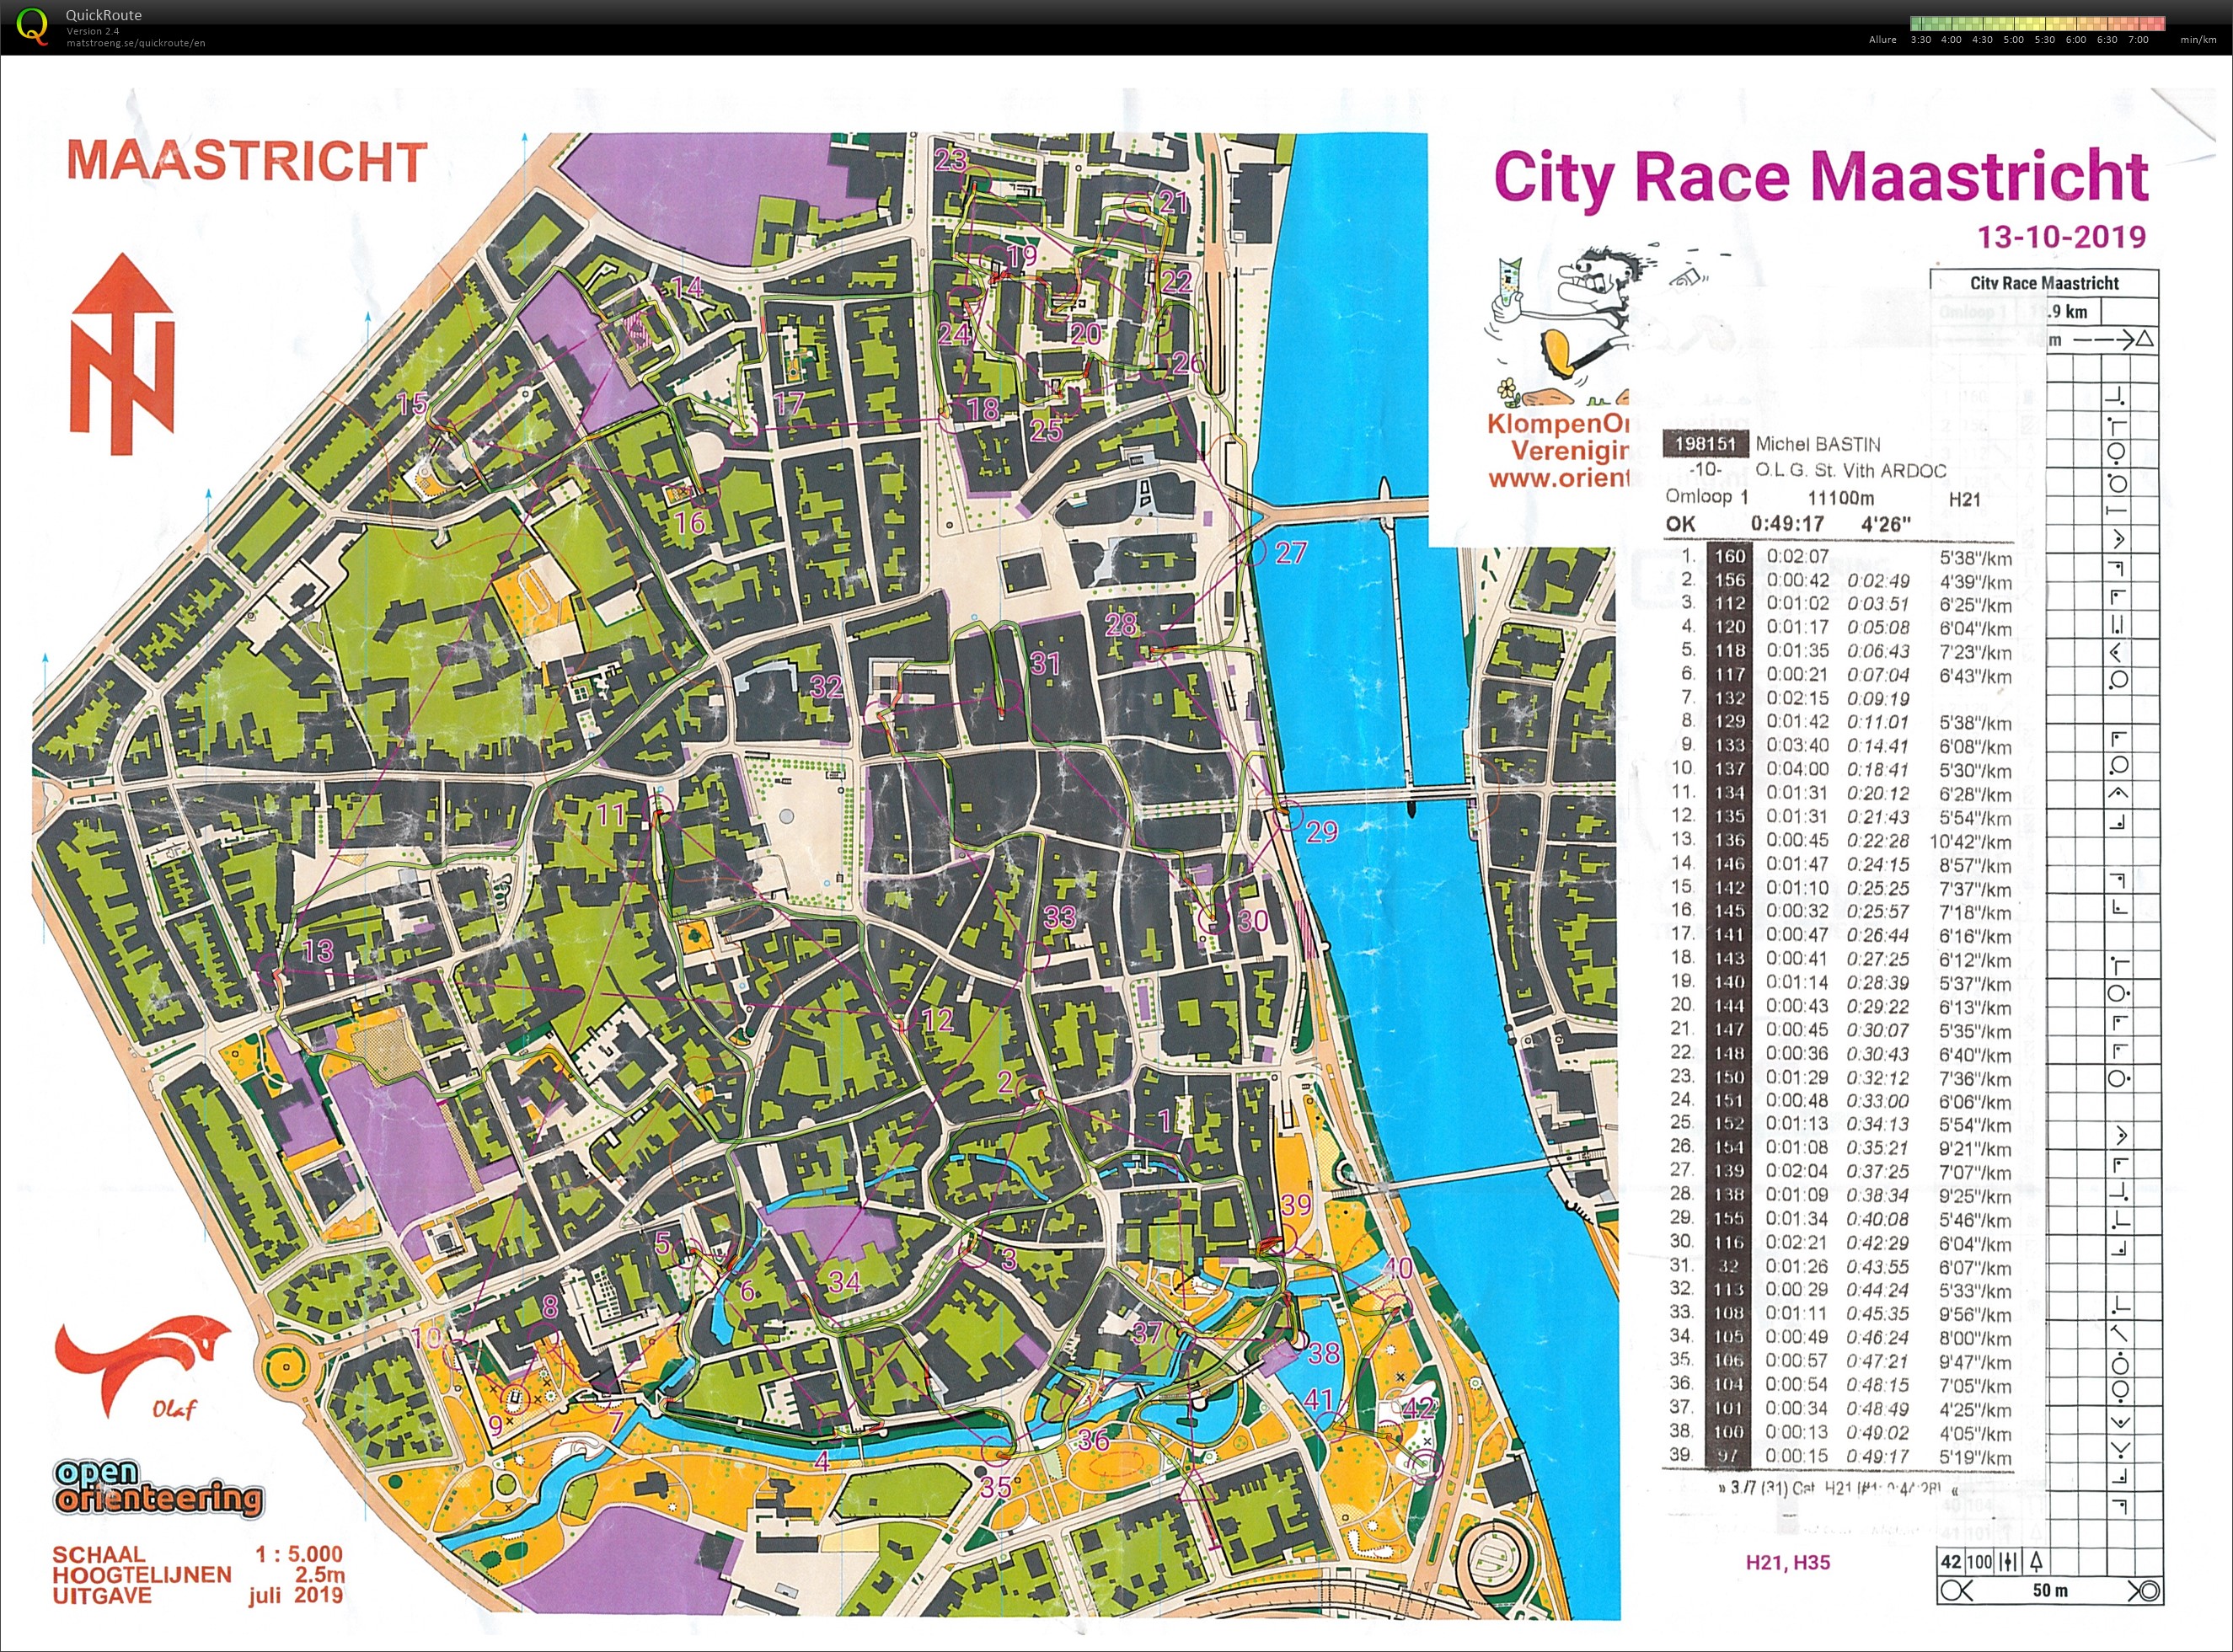 City race Maastricht (13-10-2019)